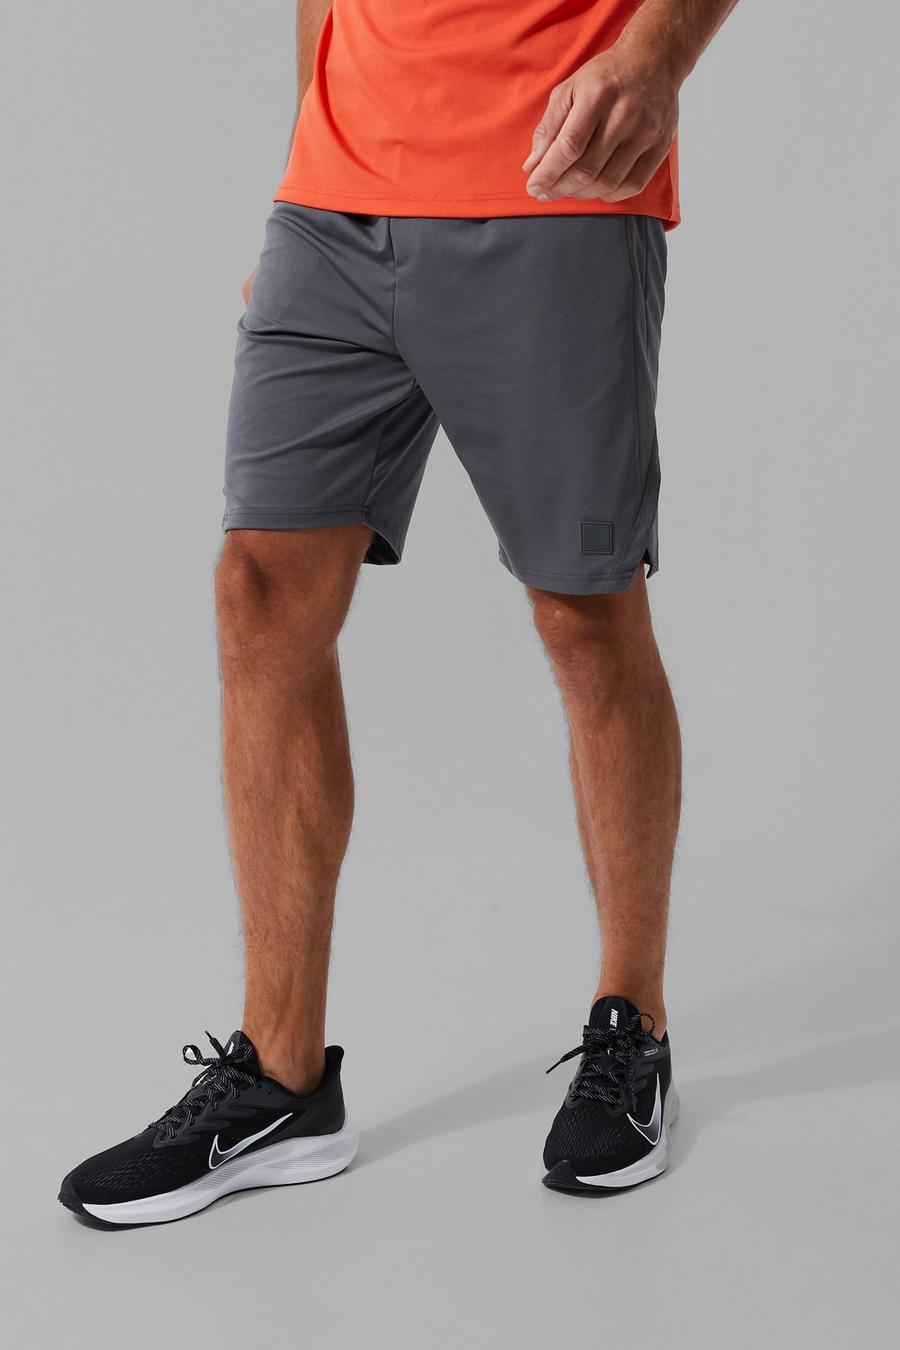 Pantaloncini Man Active Tall per alta performance con spacco sul fondo, Charcoal image number 1